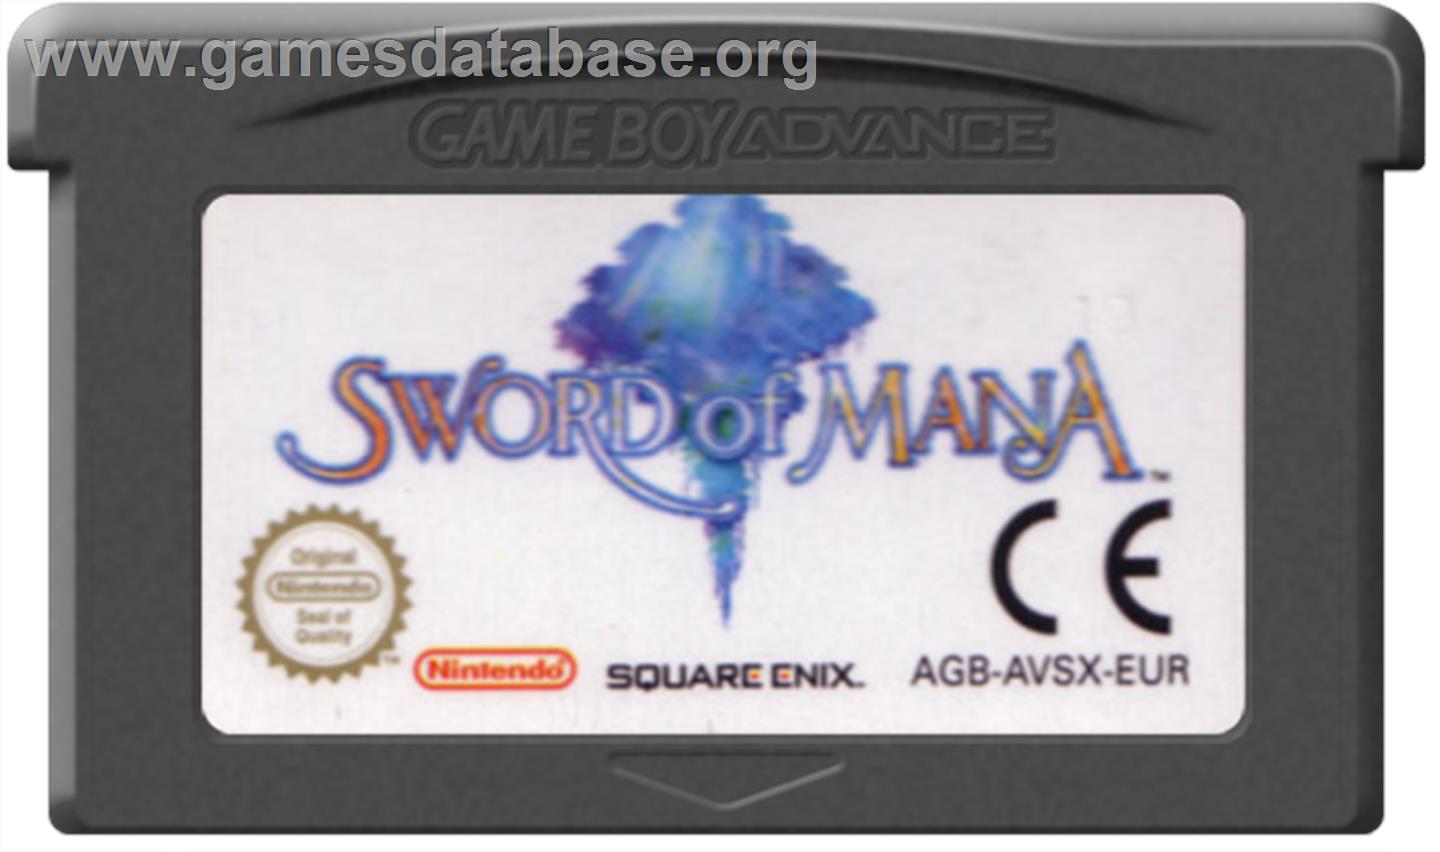 Sword of Mana - Nintendo Game Boy Advance - Artwork - Cartridge